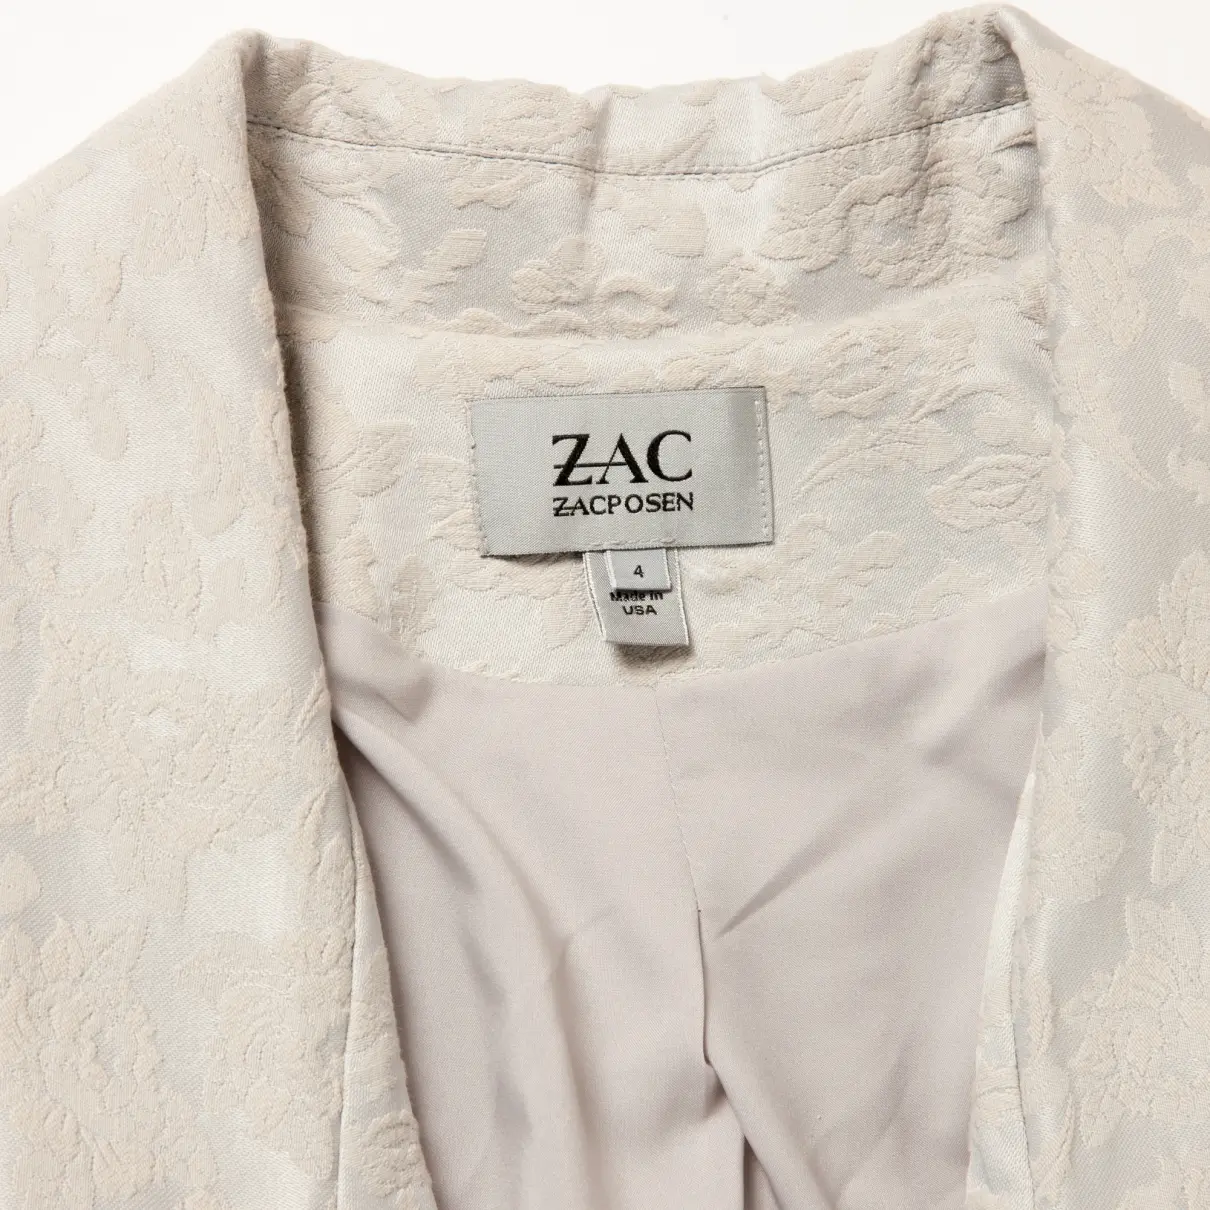 Buy Zac Posen Short vest online